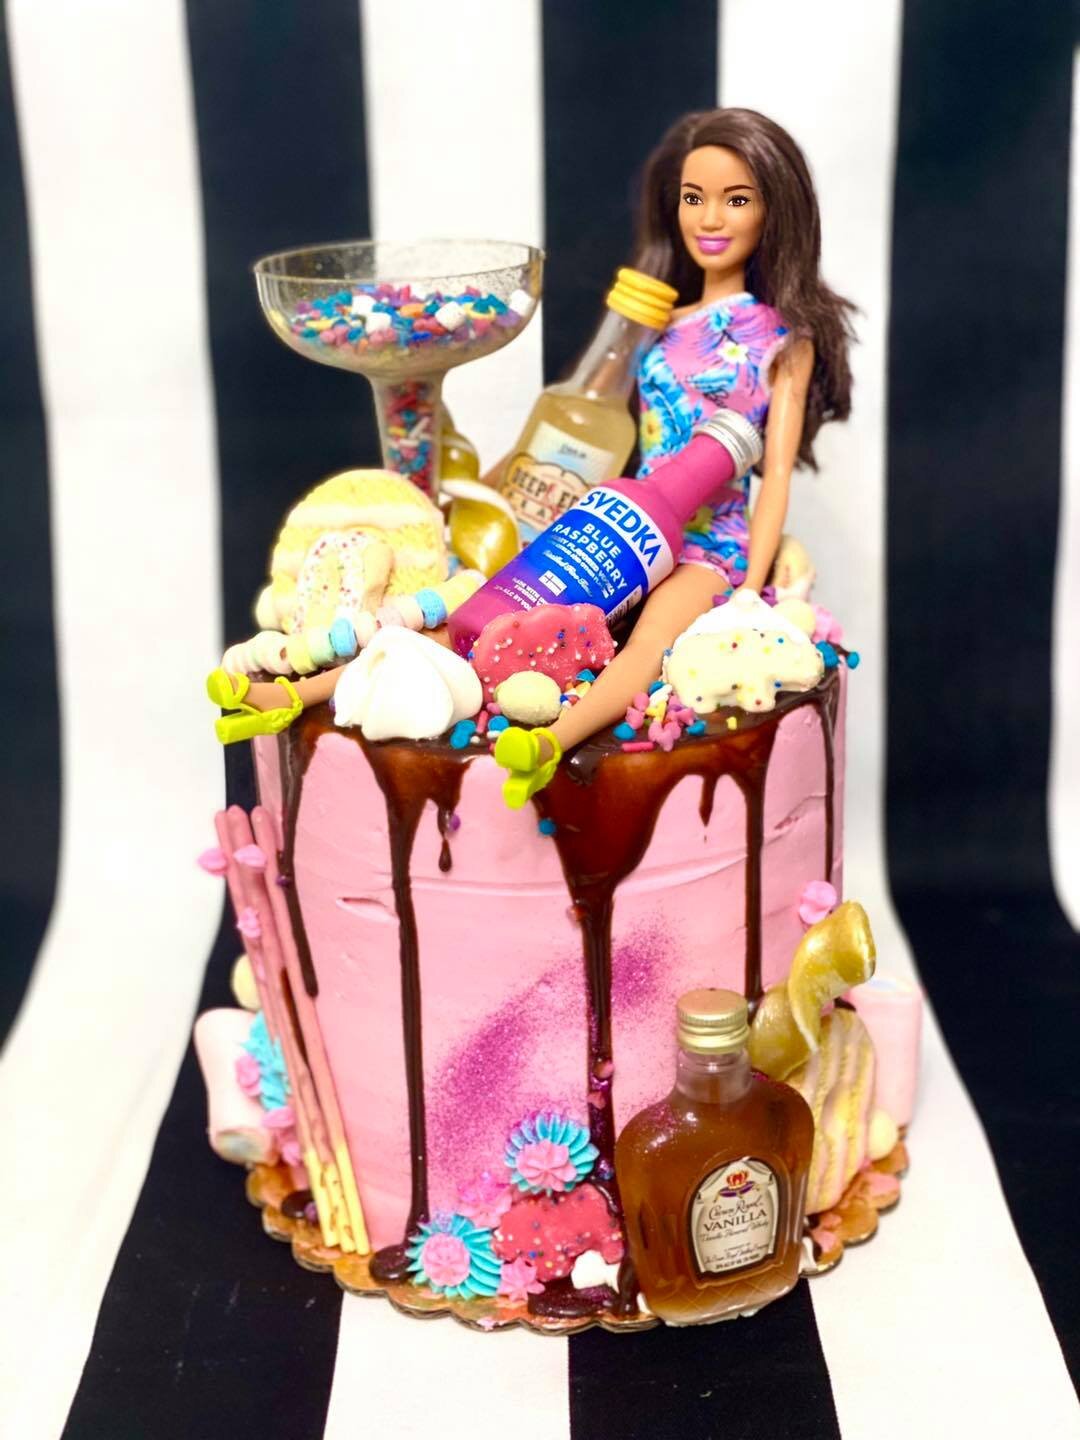 The Cupcake Lady - Drunk Barbie cake | Facebook